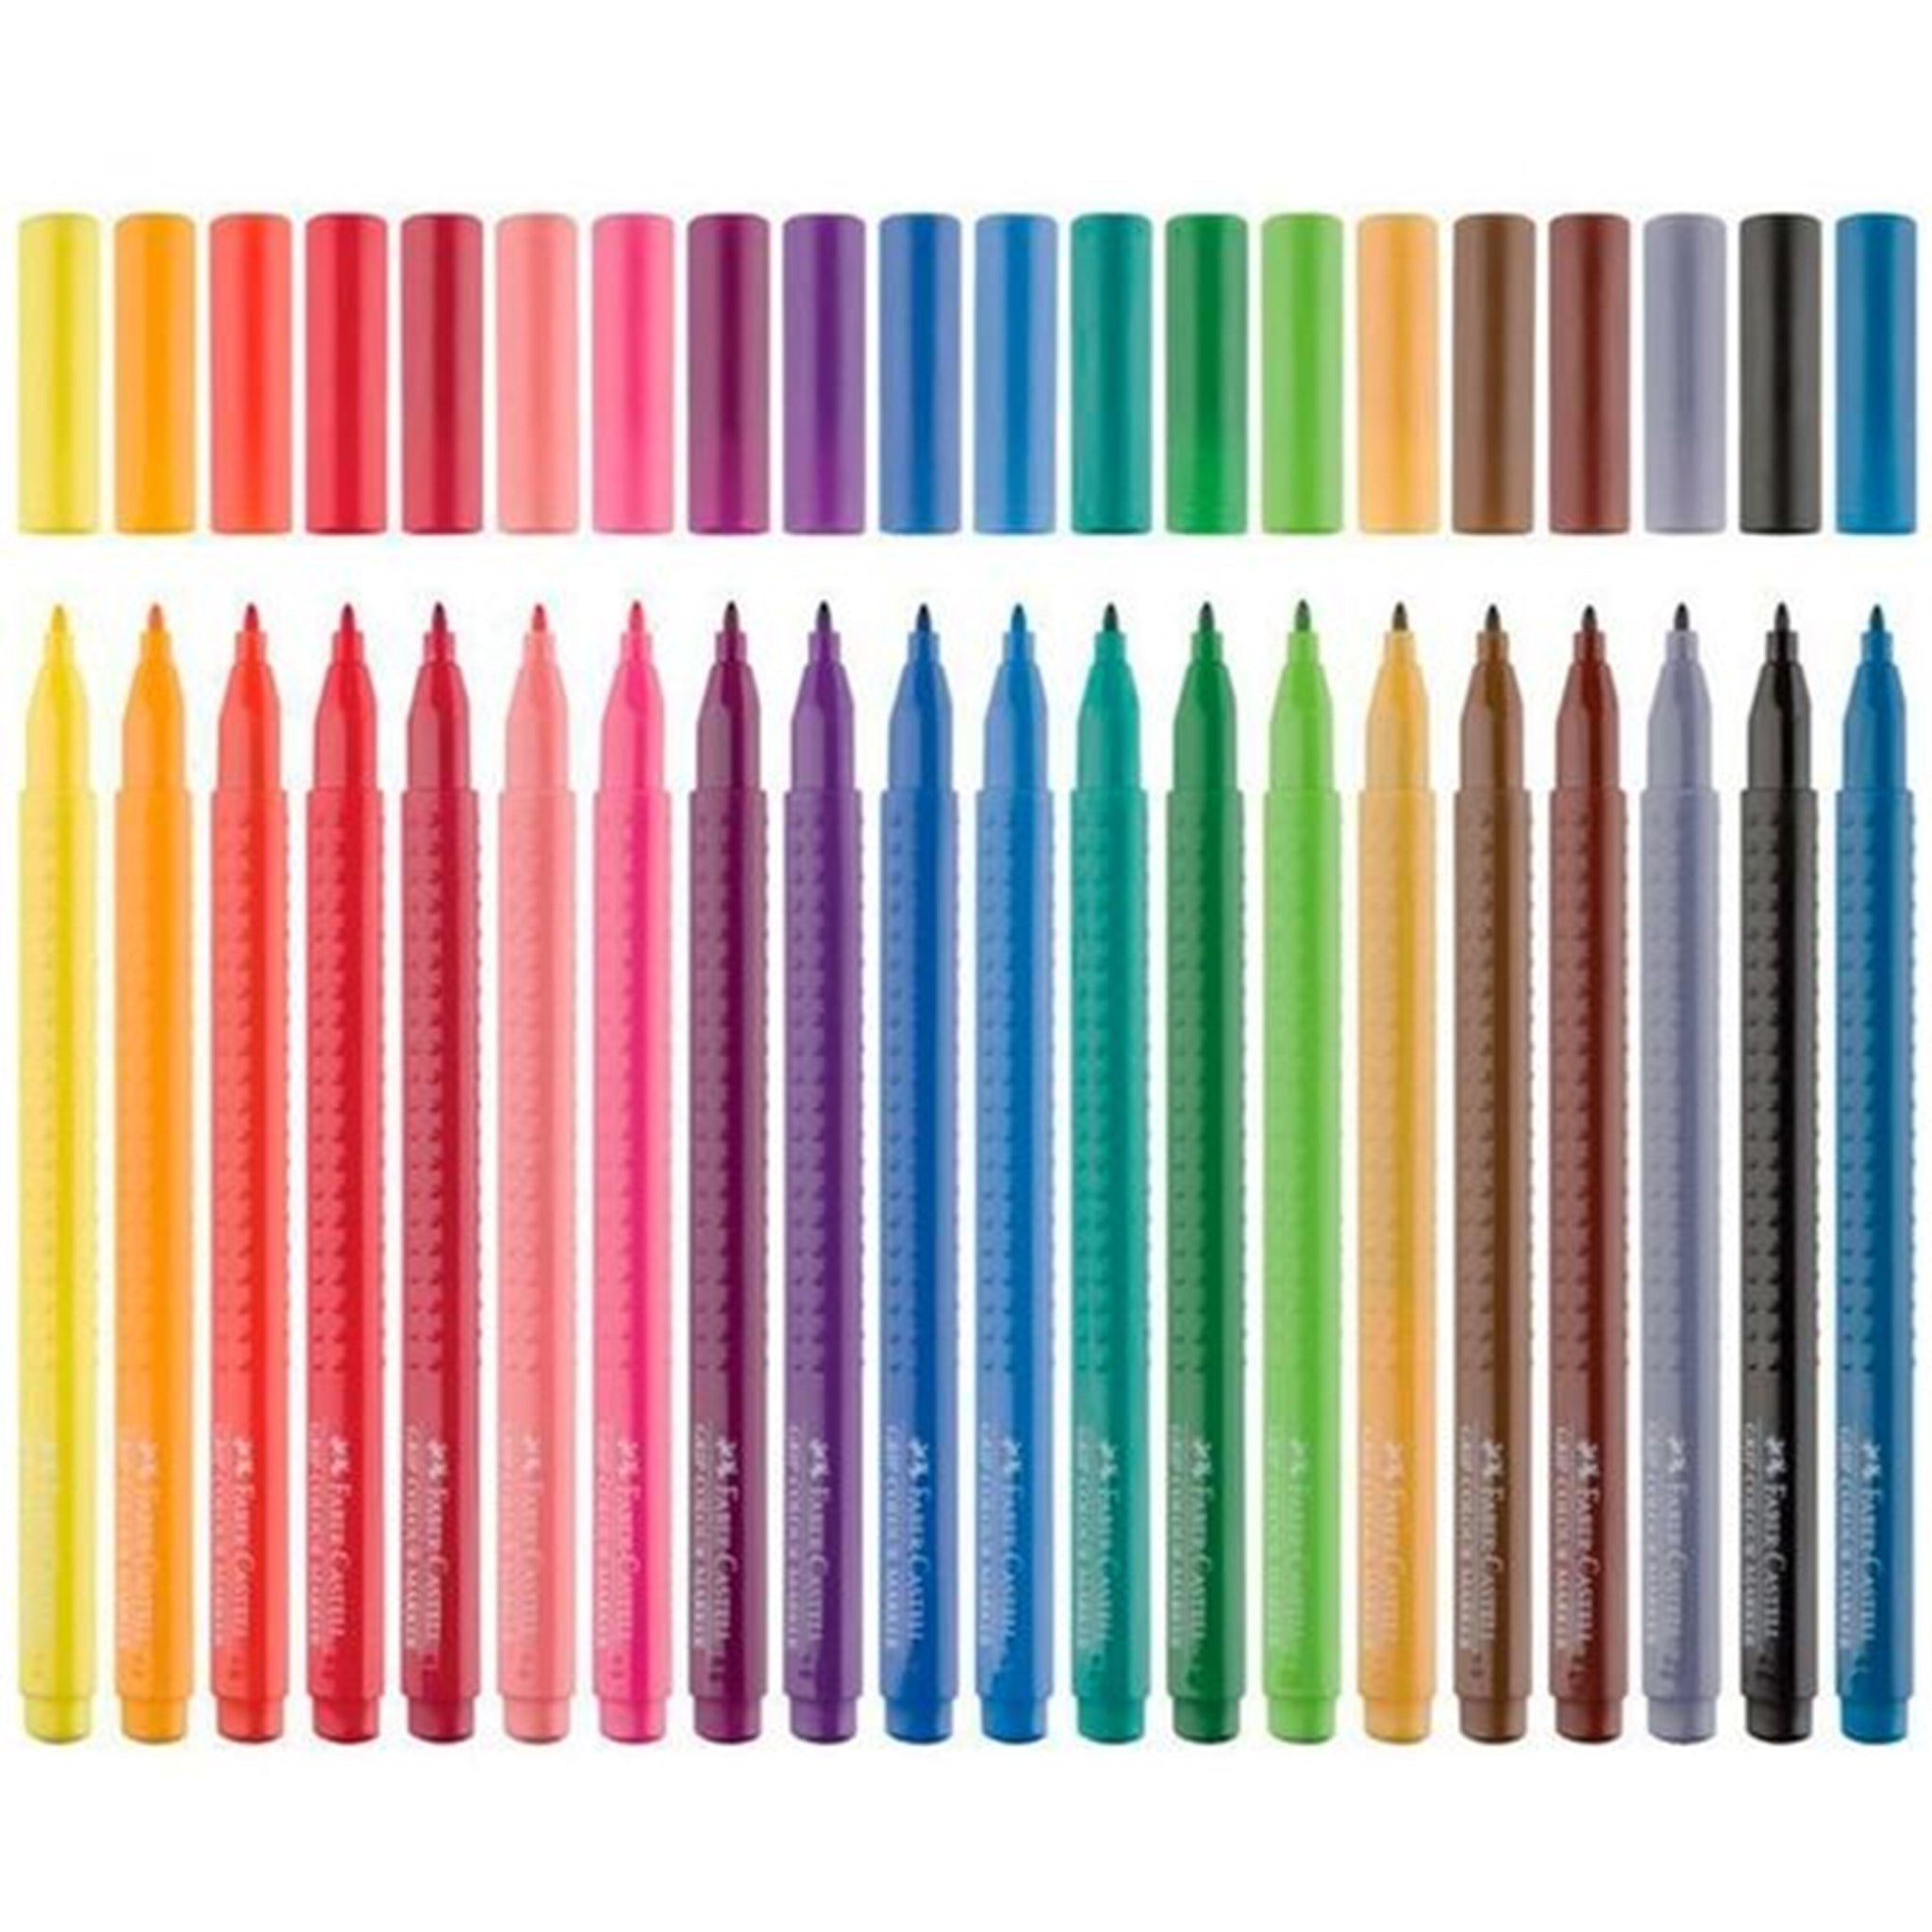 Faber Castell Grip 20 彩色马克笔是艺术家 2